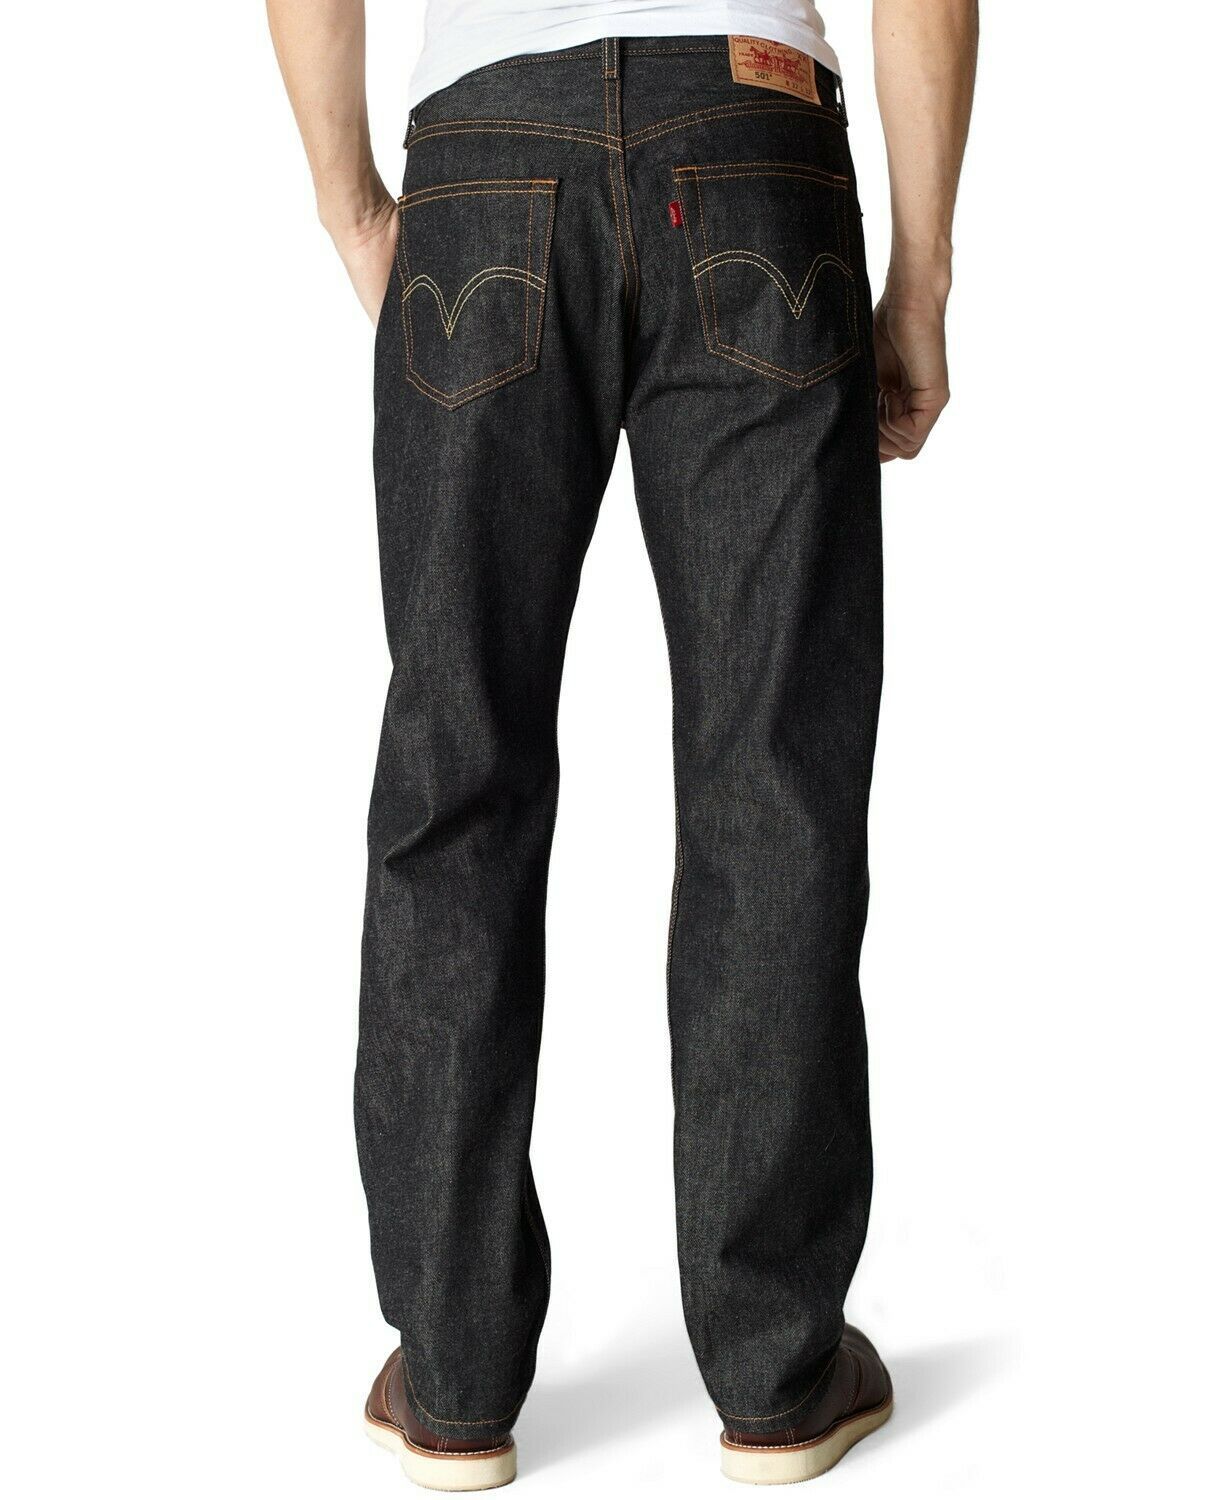 Levi's Men's 501 Original Fit Jean Shrink To Fit - Jeans